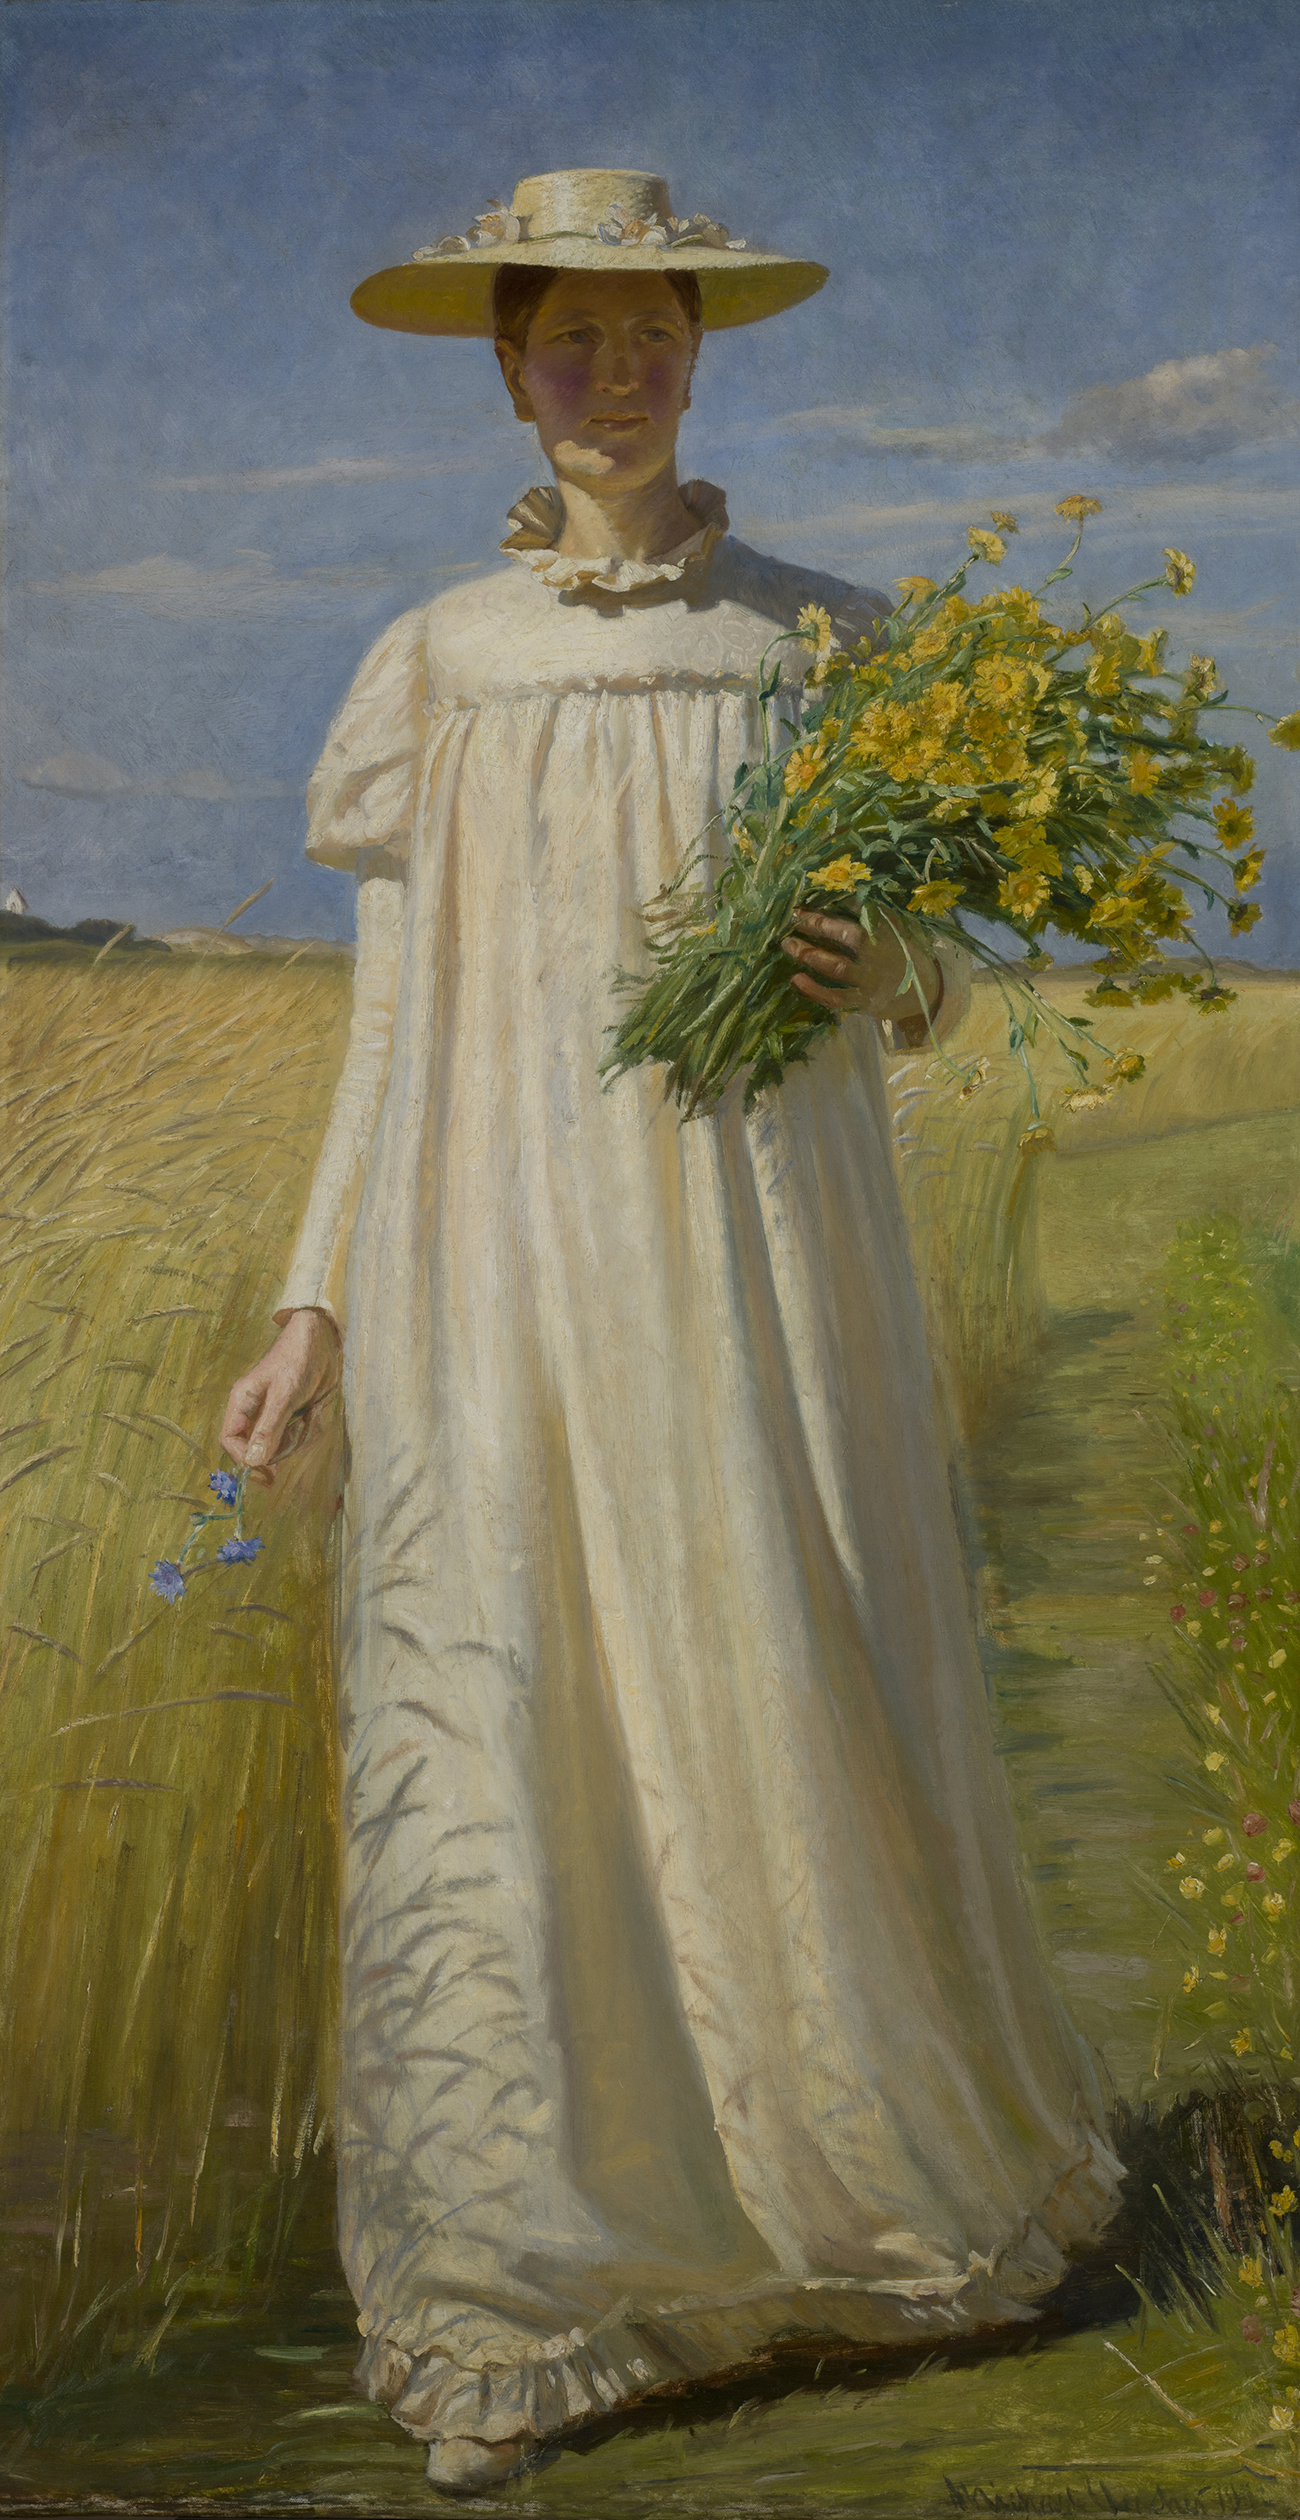 Anna Ancher wraca z pola by Michael Ancher - 1902 - 64 x 55 cm 